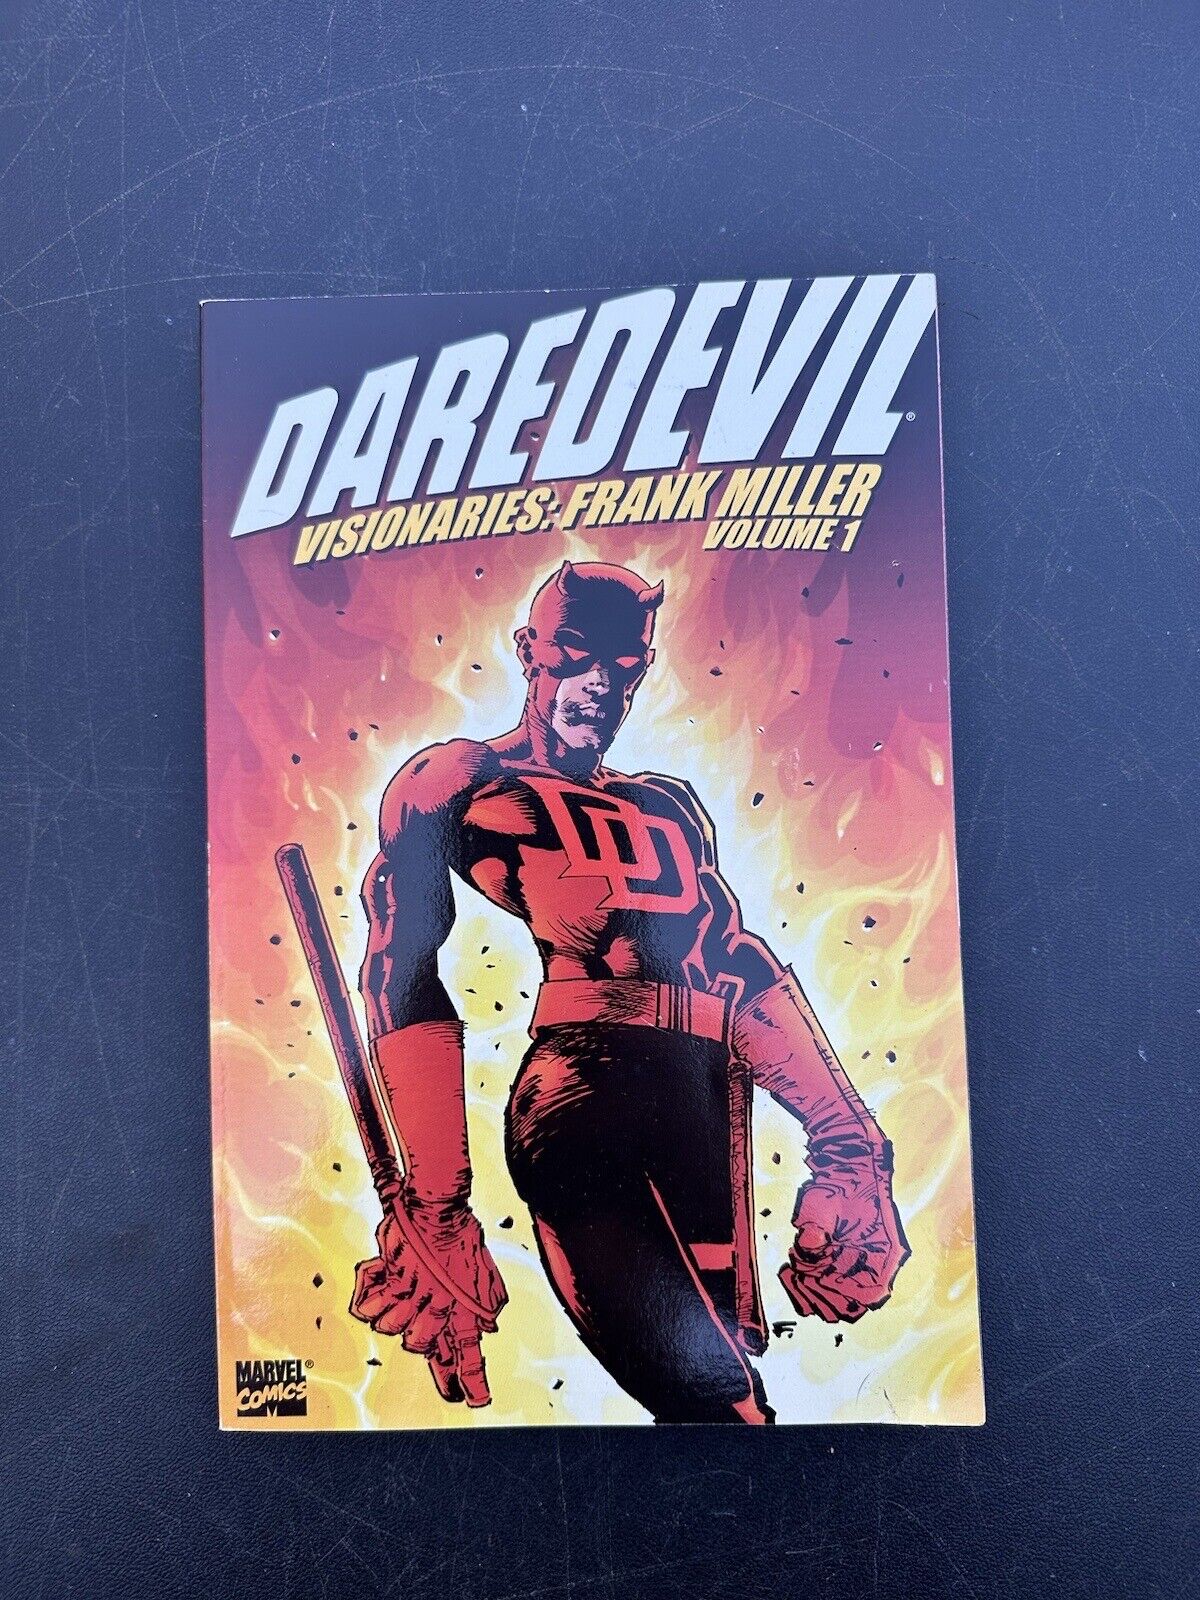 Marvel Comics Daredevil Visionaries: Frank Miller Volume 1